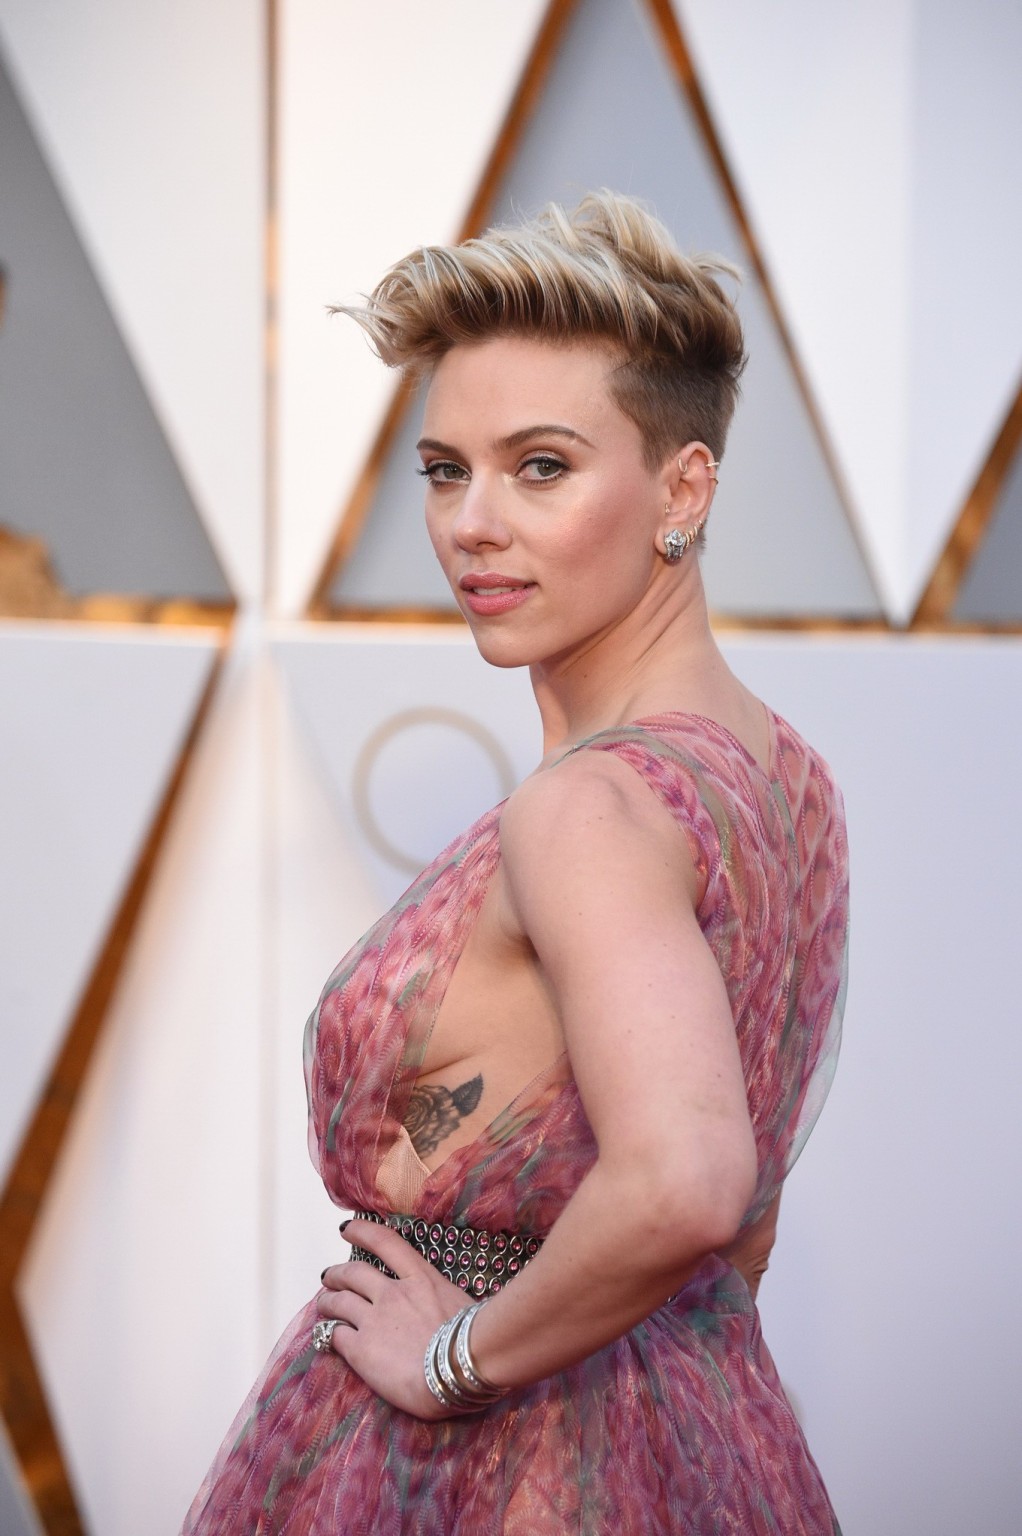 Scarlett Johansson shows sideboob in pink lace dress